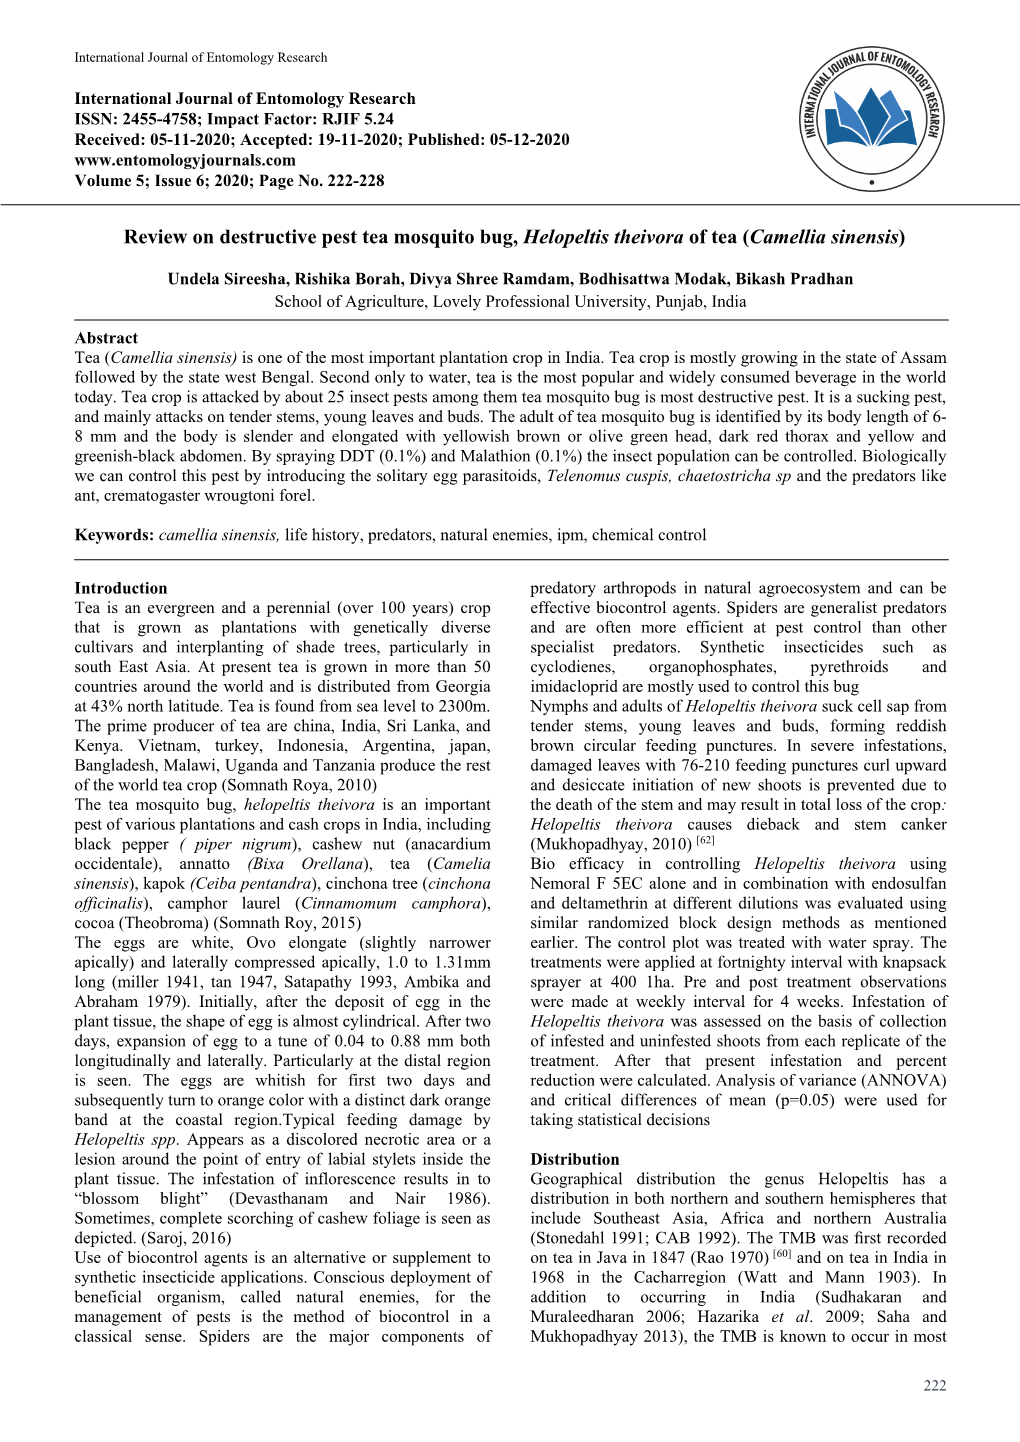 Review on Destructive Pest Tea Mosquito Bug, Helopeltis Theivora of Tea (Camellia Sinensis)